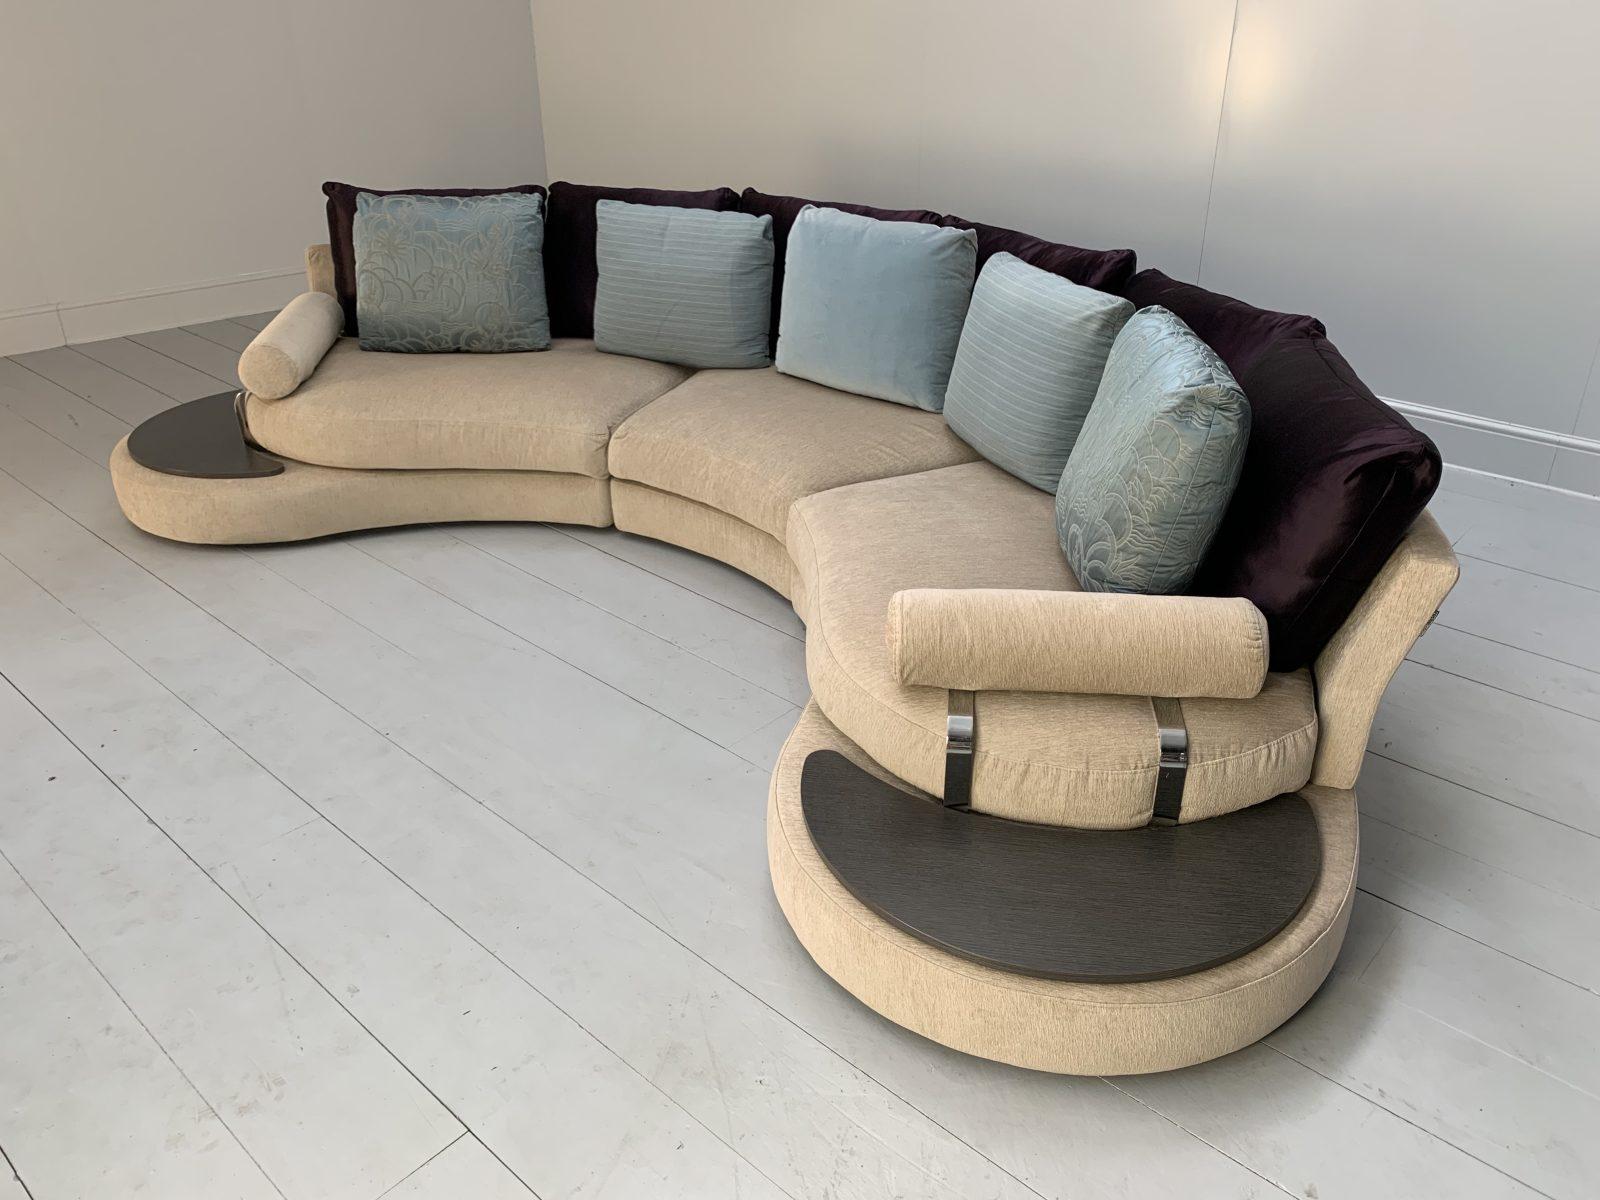 Roche Bobois “Formentera” Sofa, 5-Seat Curved, in Chenille In Good Condition For Sale In Barrowford, GB